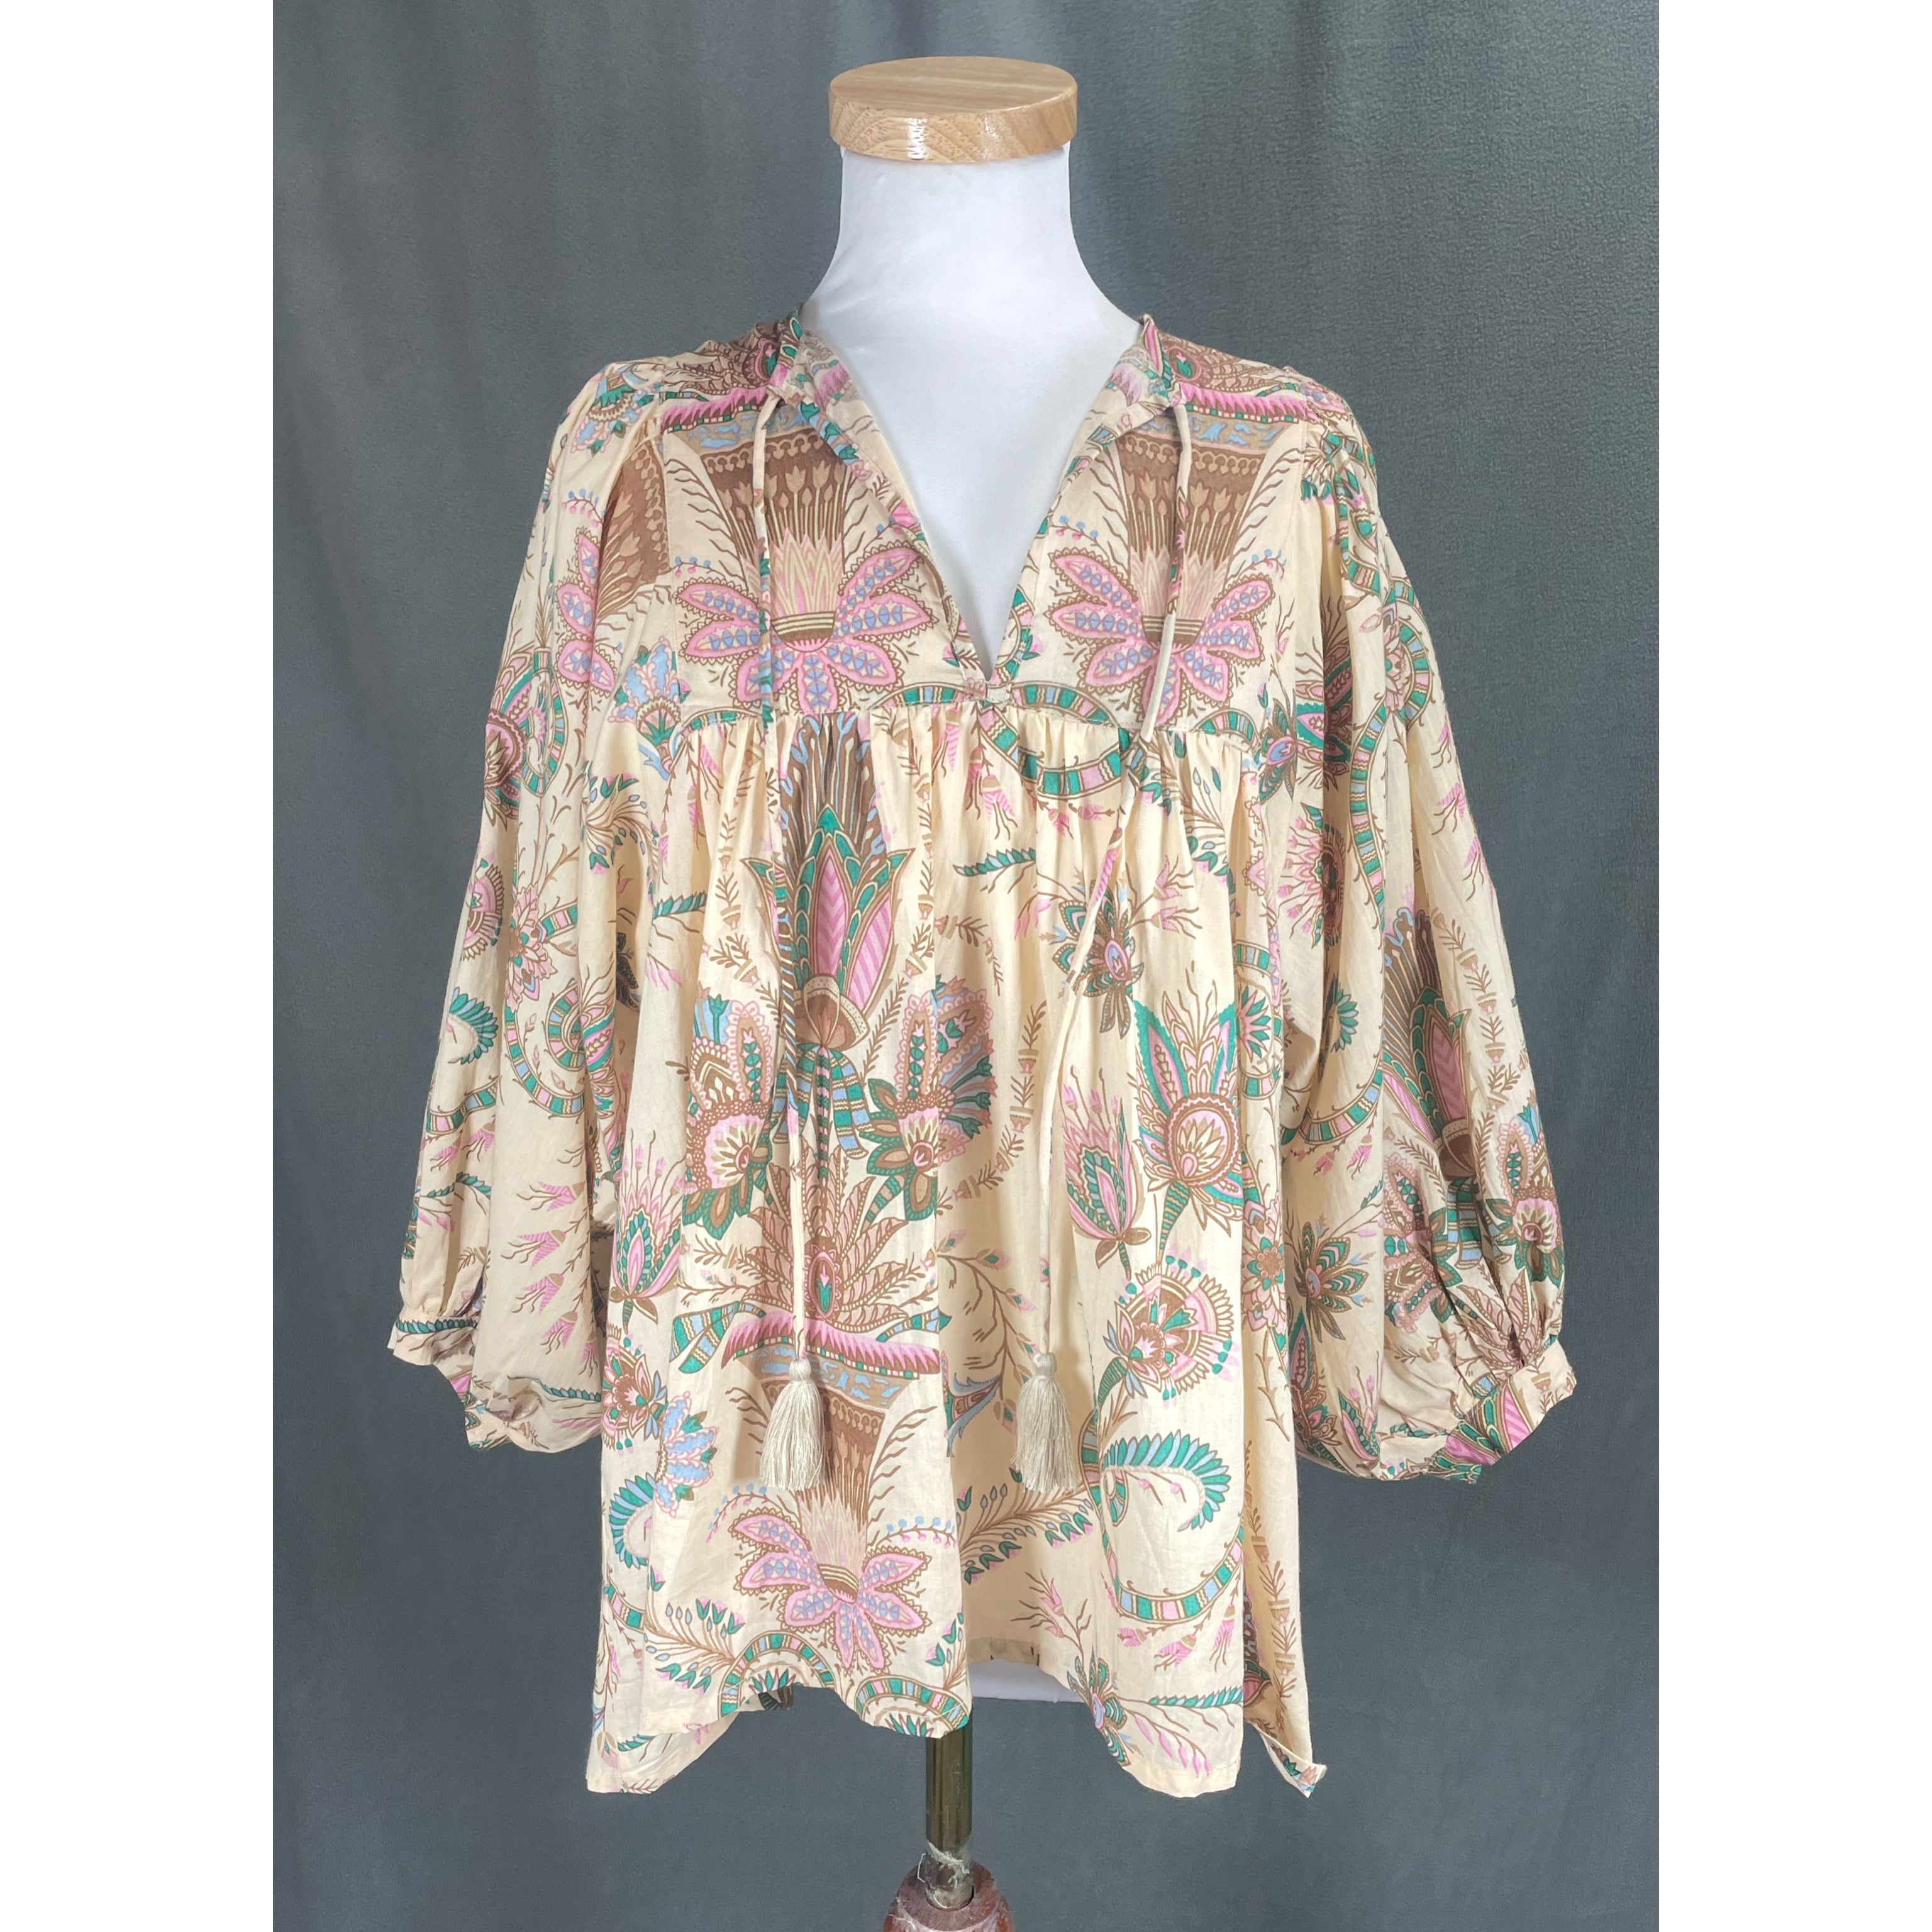 Mille blush floral blouse, size XS (runs large)